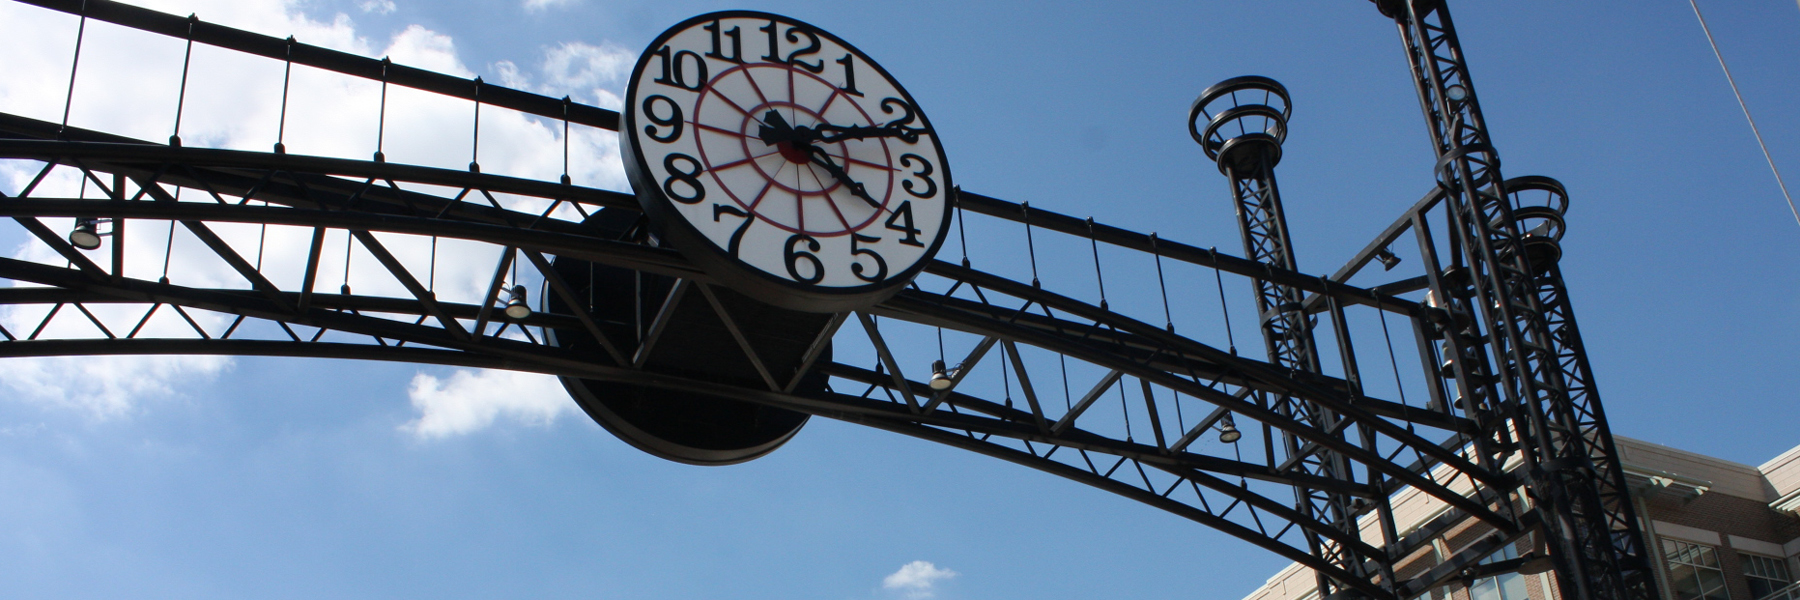 Iconic Lawrenceburg clock.